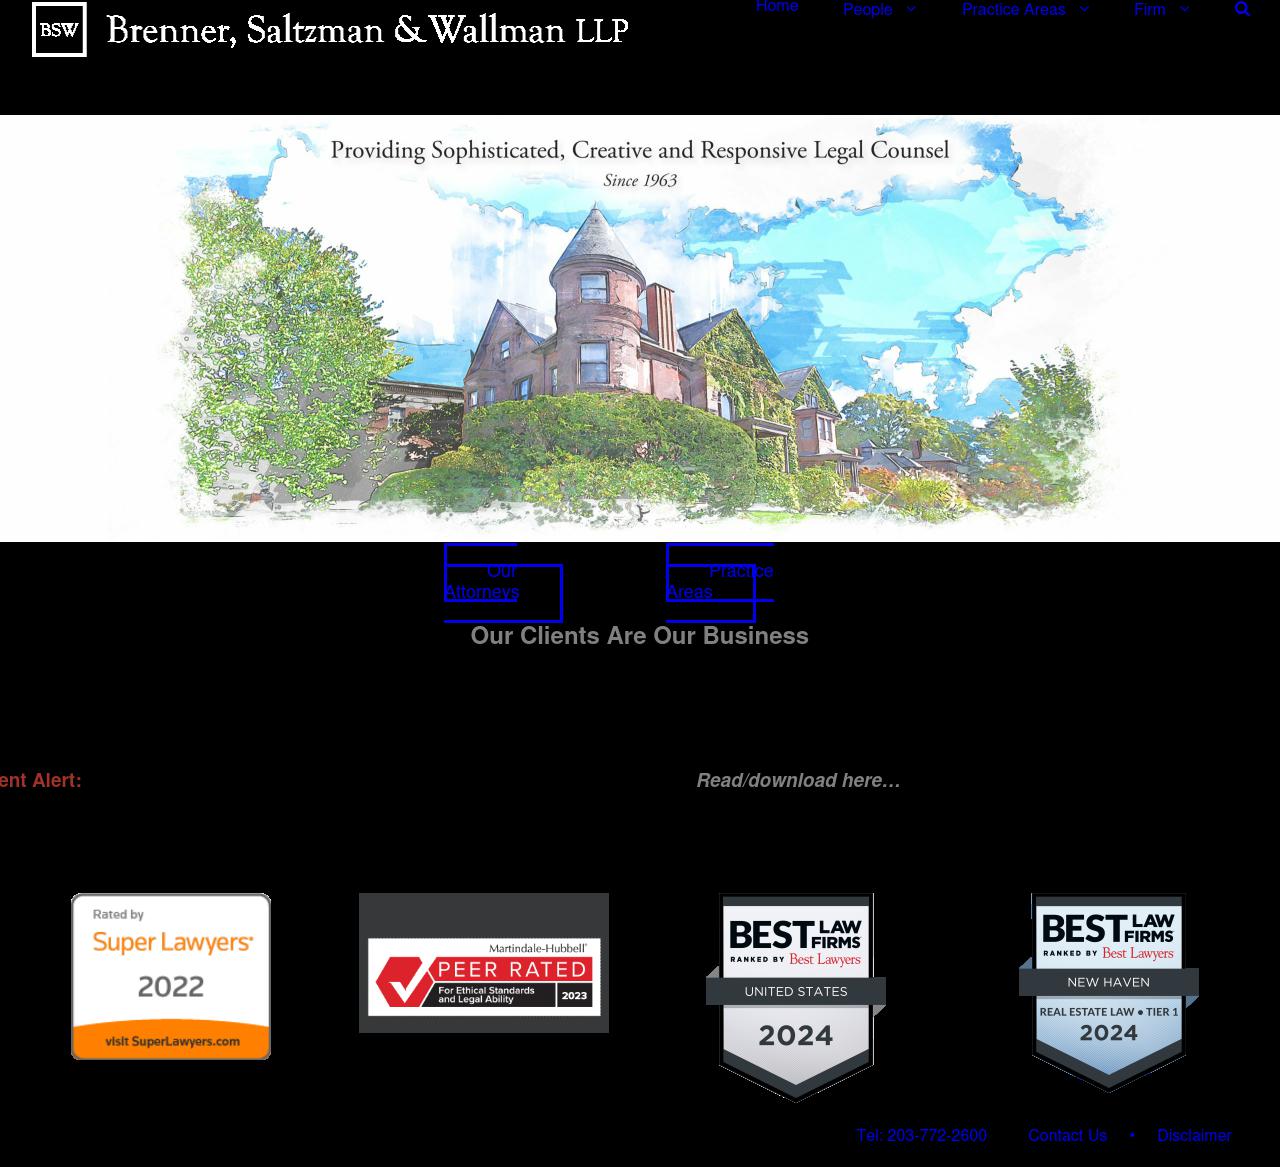 Brenner: Saltzman & Wallman Llp - New Haven CT Lawyers